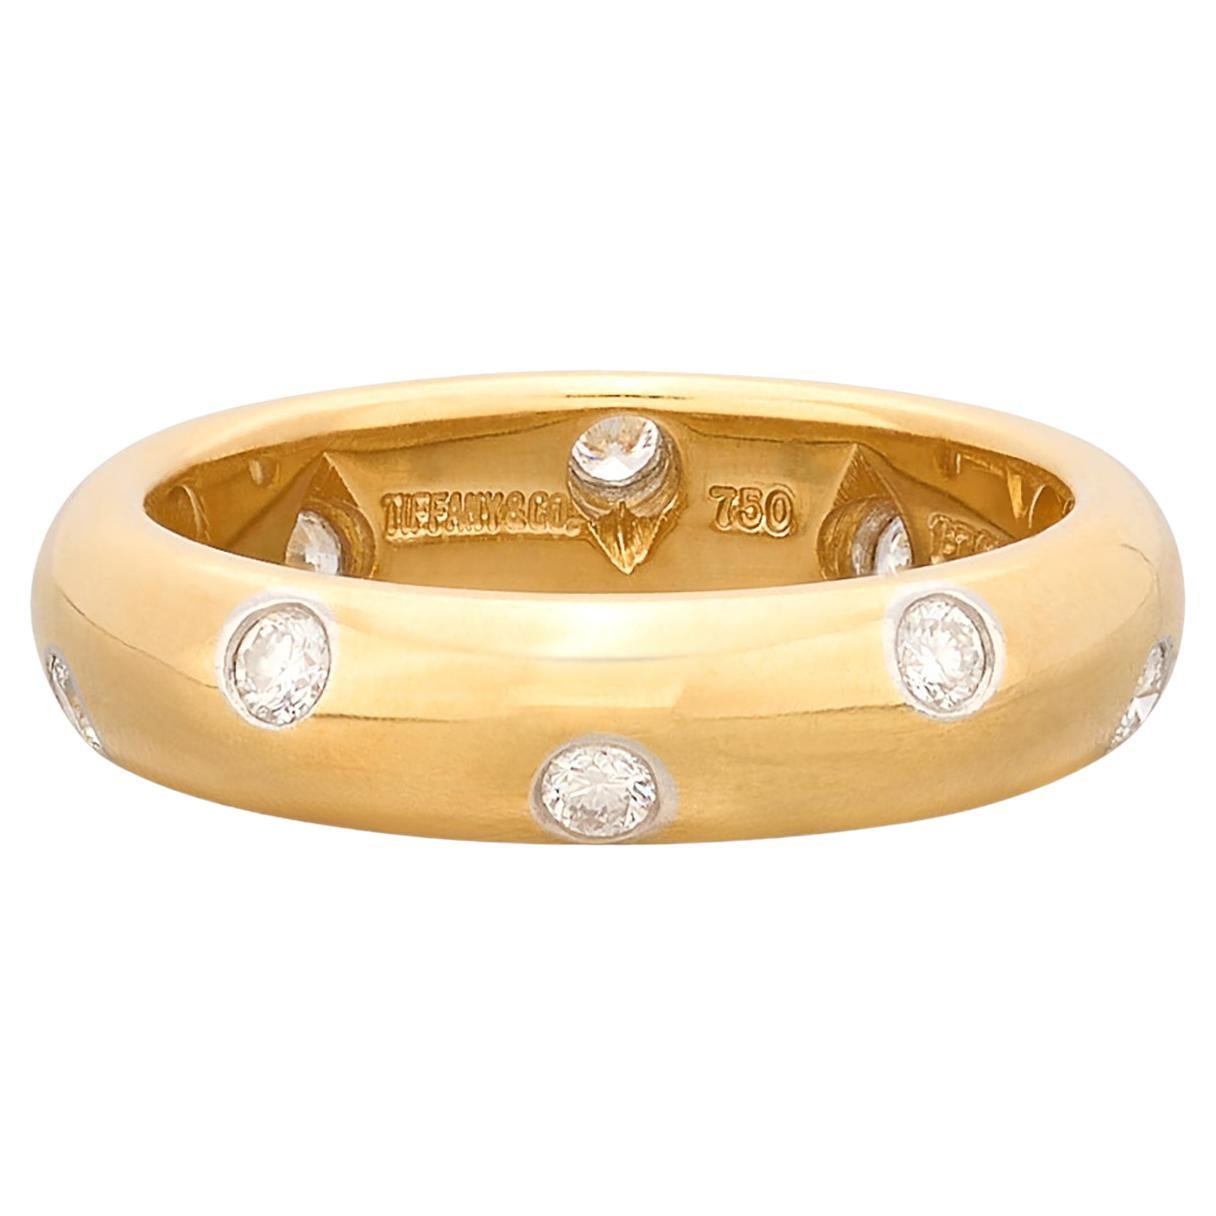 Tiffany & Co. Yellow Gold & Platinum Diamond Band Ring